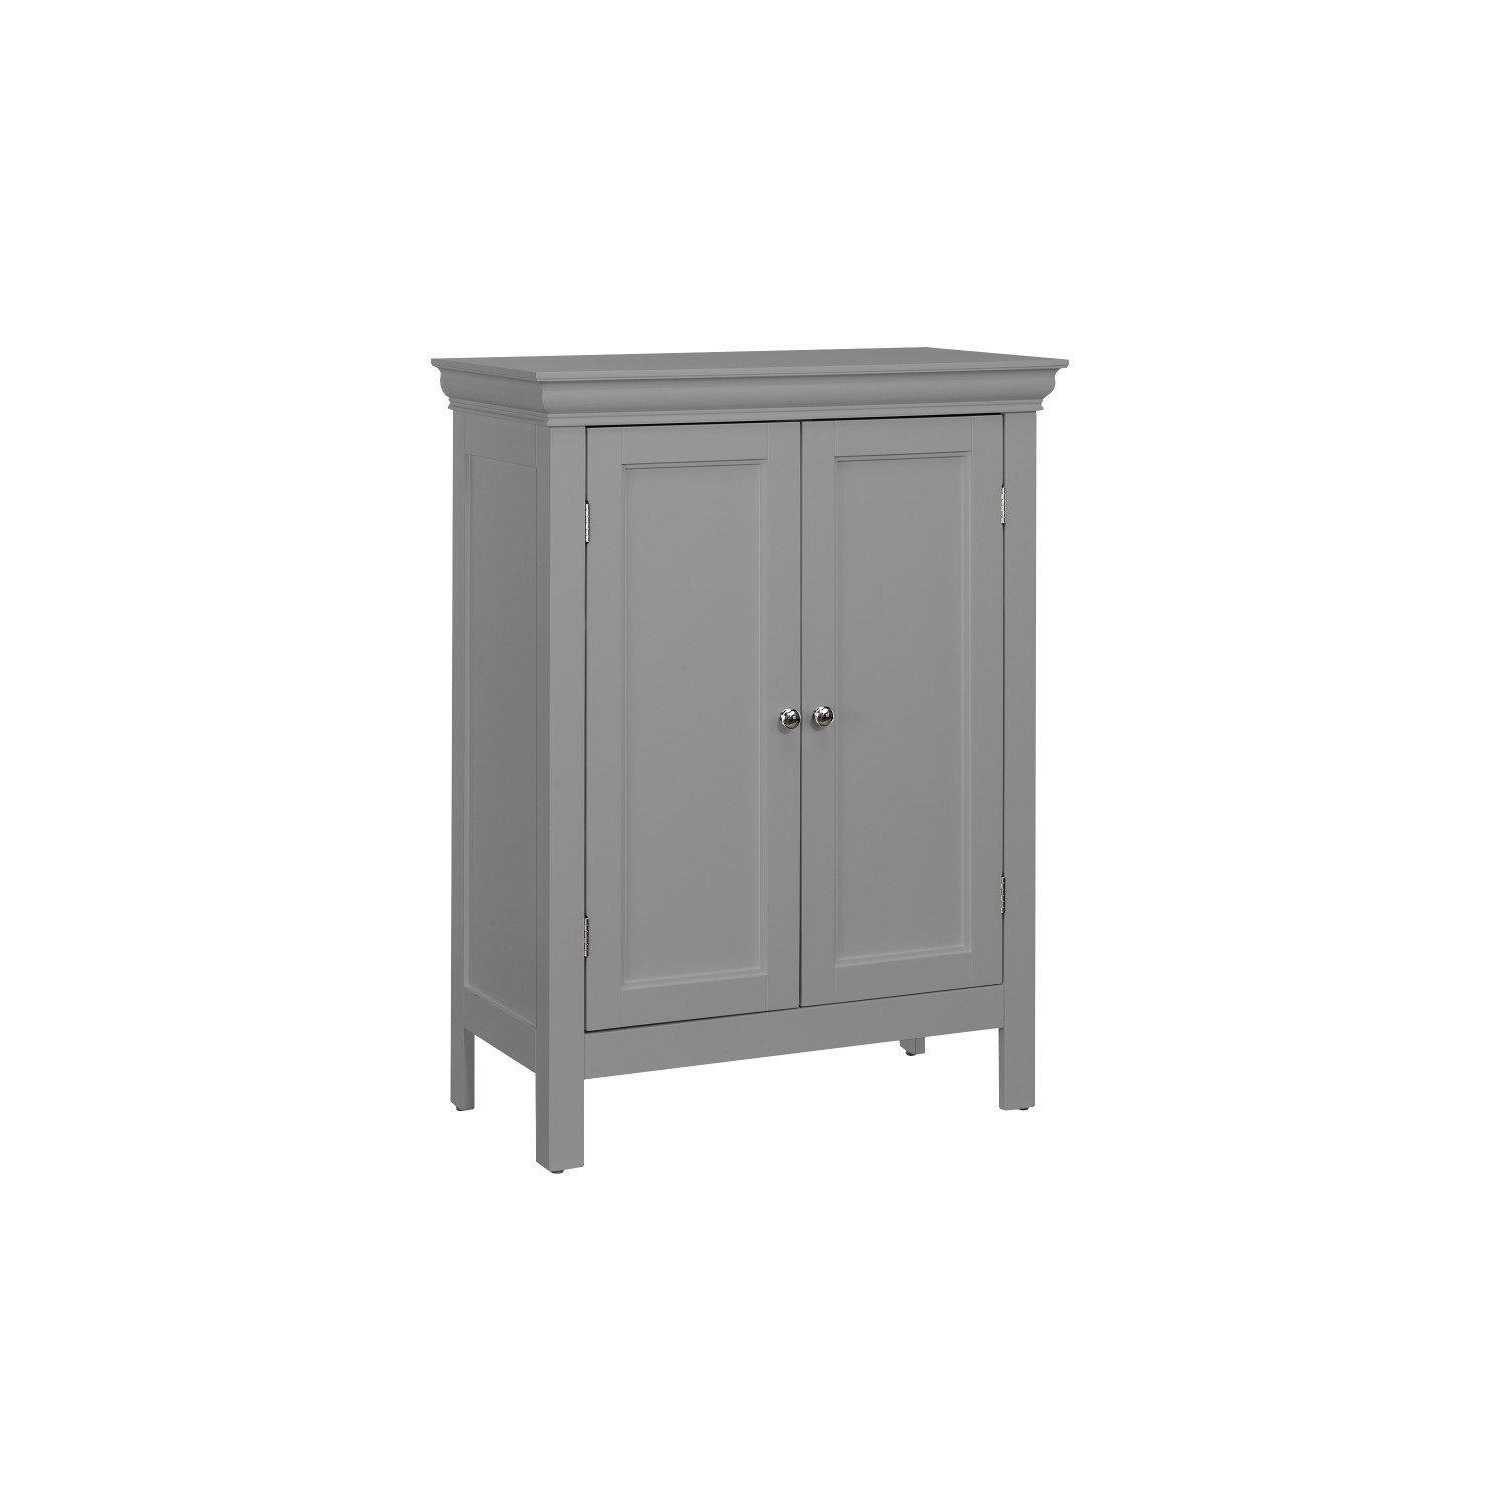 Stratford Bathroom Floor Cabinet Grey With 2 Shelves - image 1